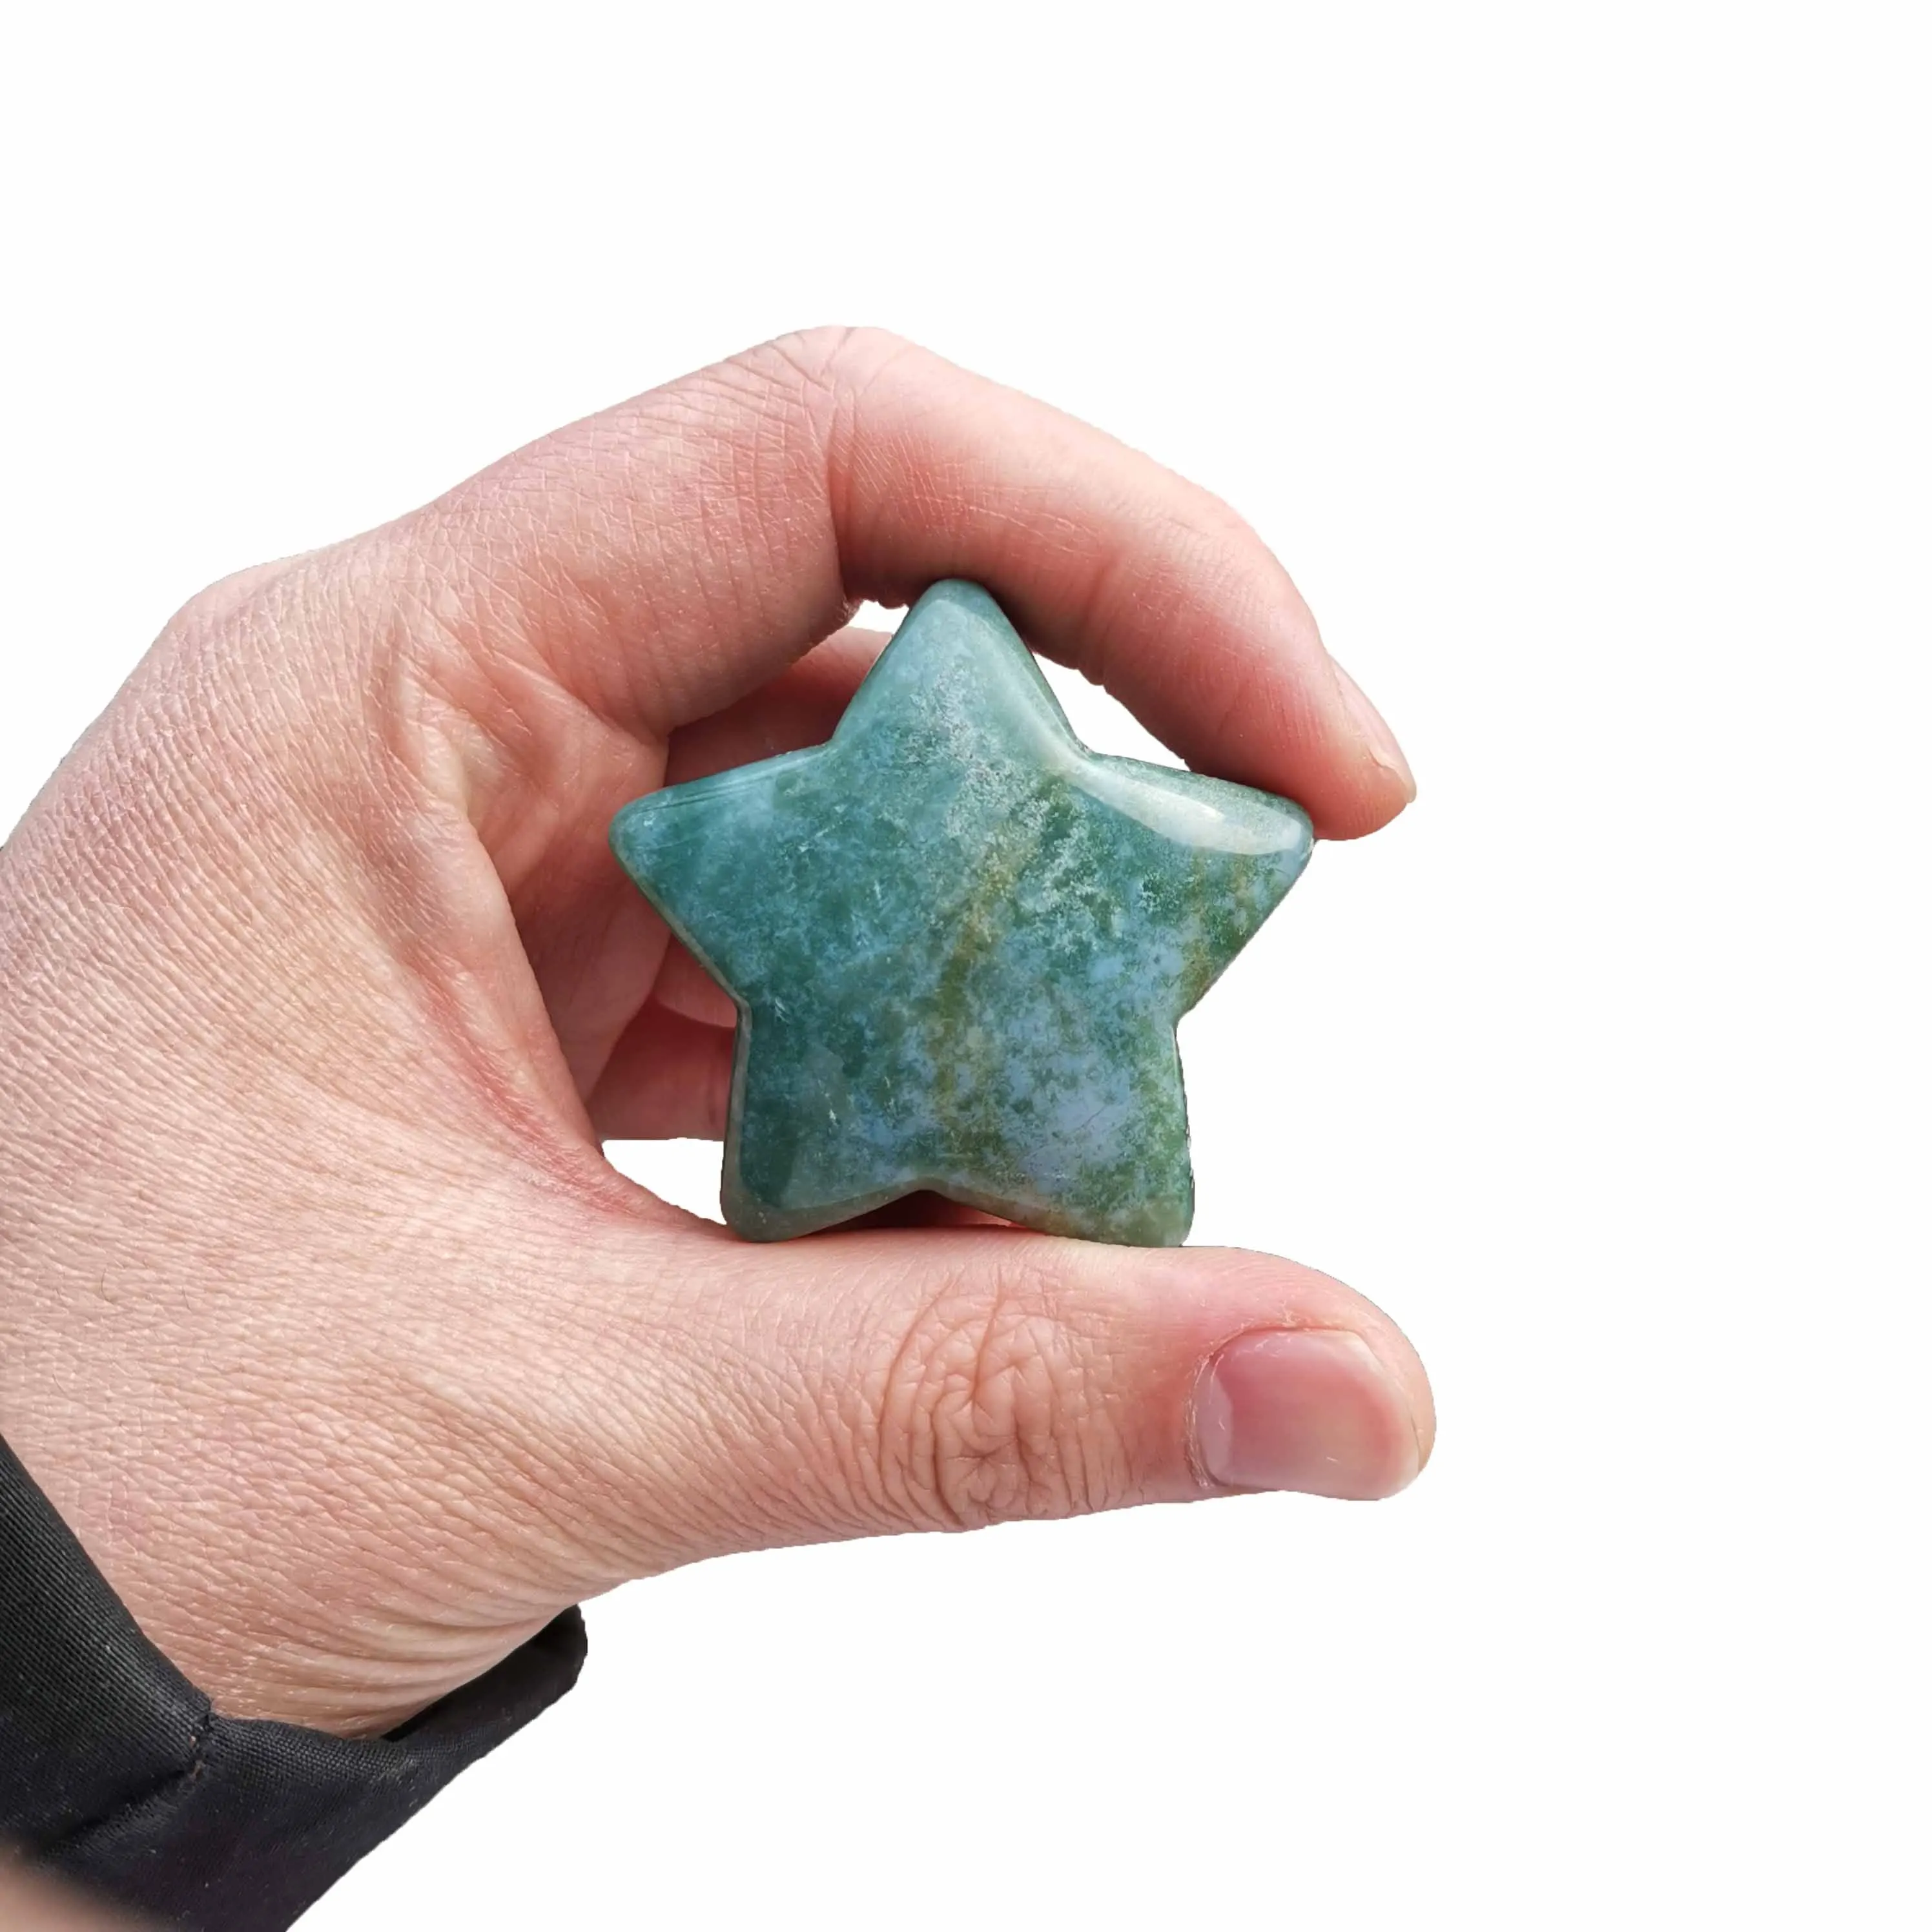 

Natural Polished Crystals Gemstone Green Moss Agate Star Shaped Healing Stones For Folk Crafts Natural Quartz Crystals